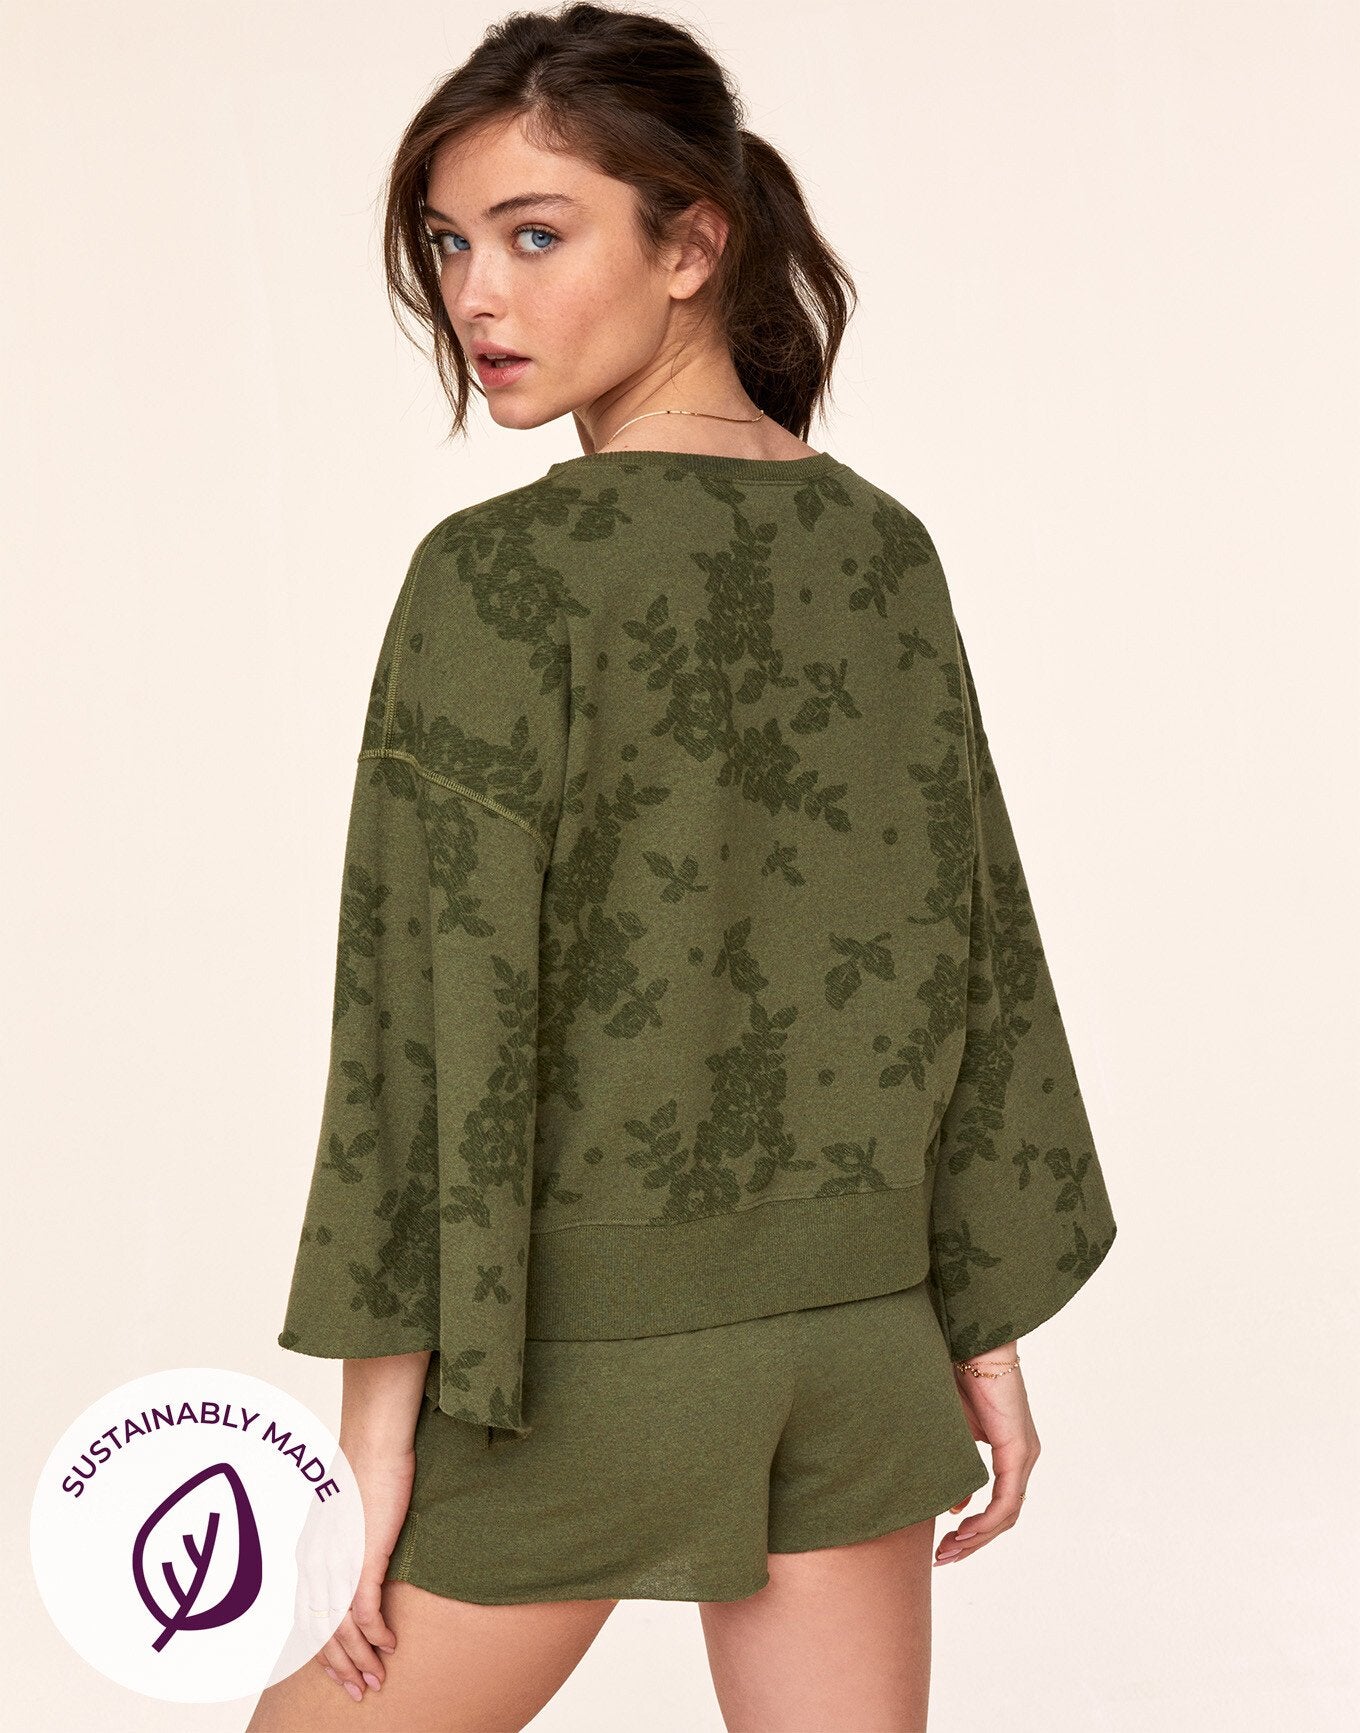 Adore Me Bailey Sweatshirt & Short Set in color Capulet Olive and shape pj